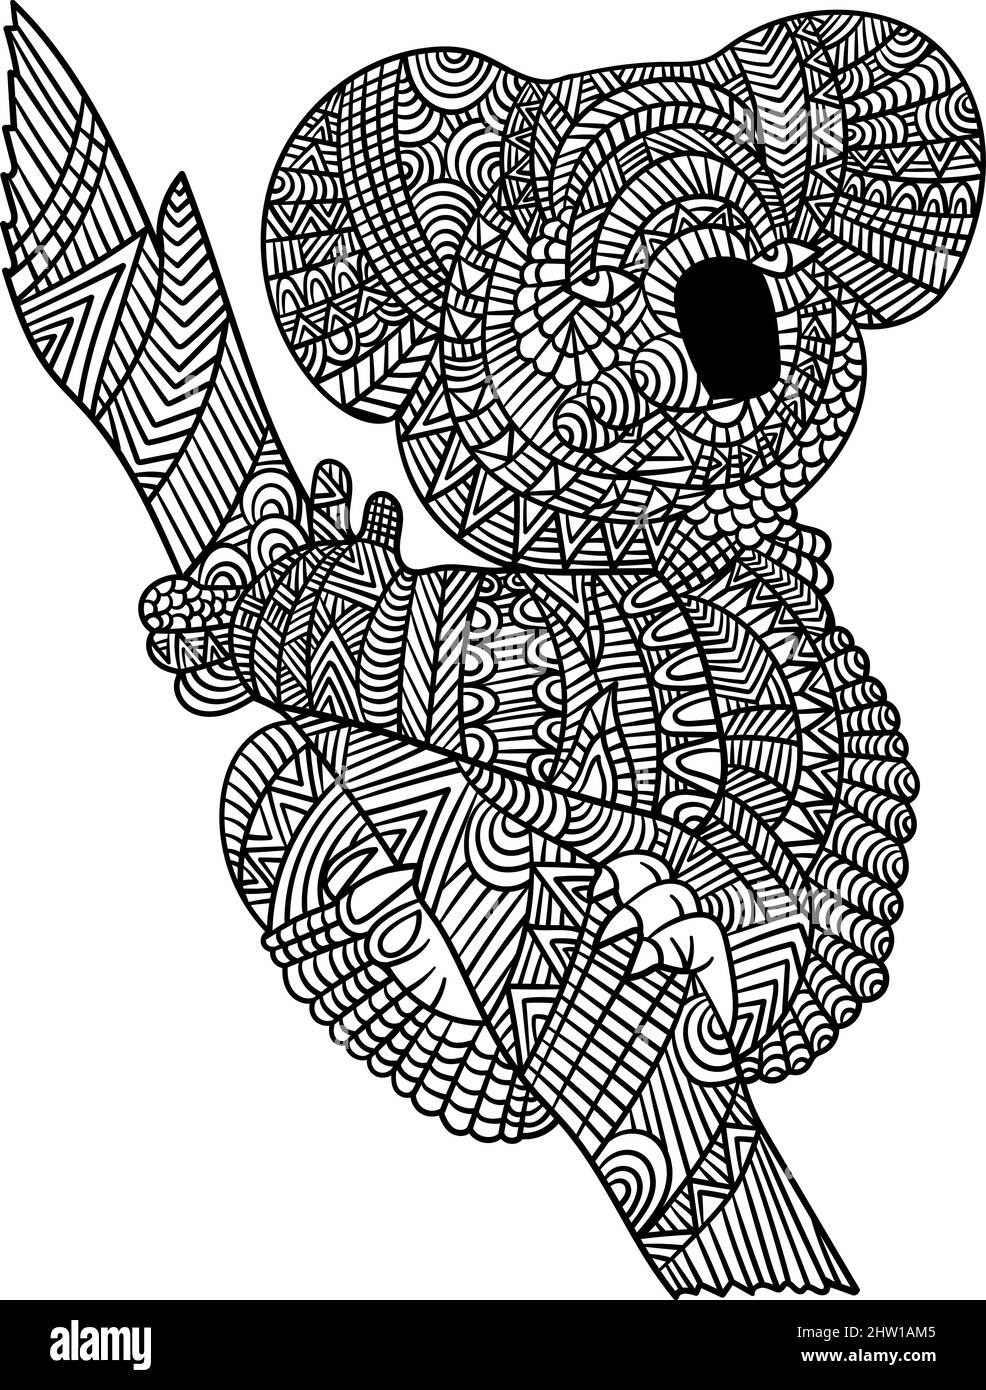 Koala Mandala Coloring Pages for Adults Stock Vector Image & Art ...